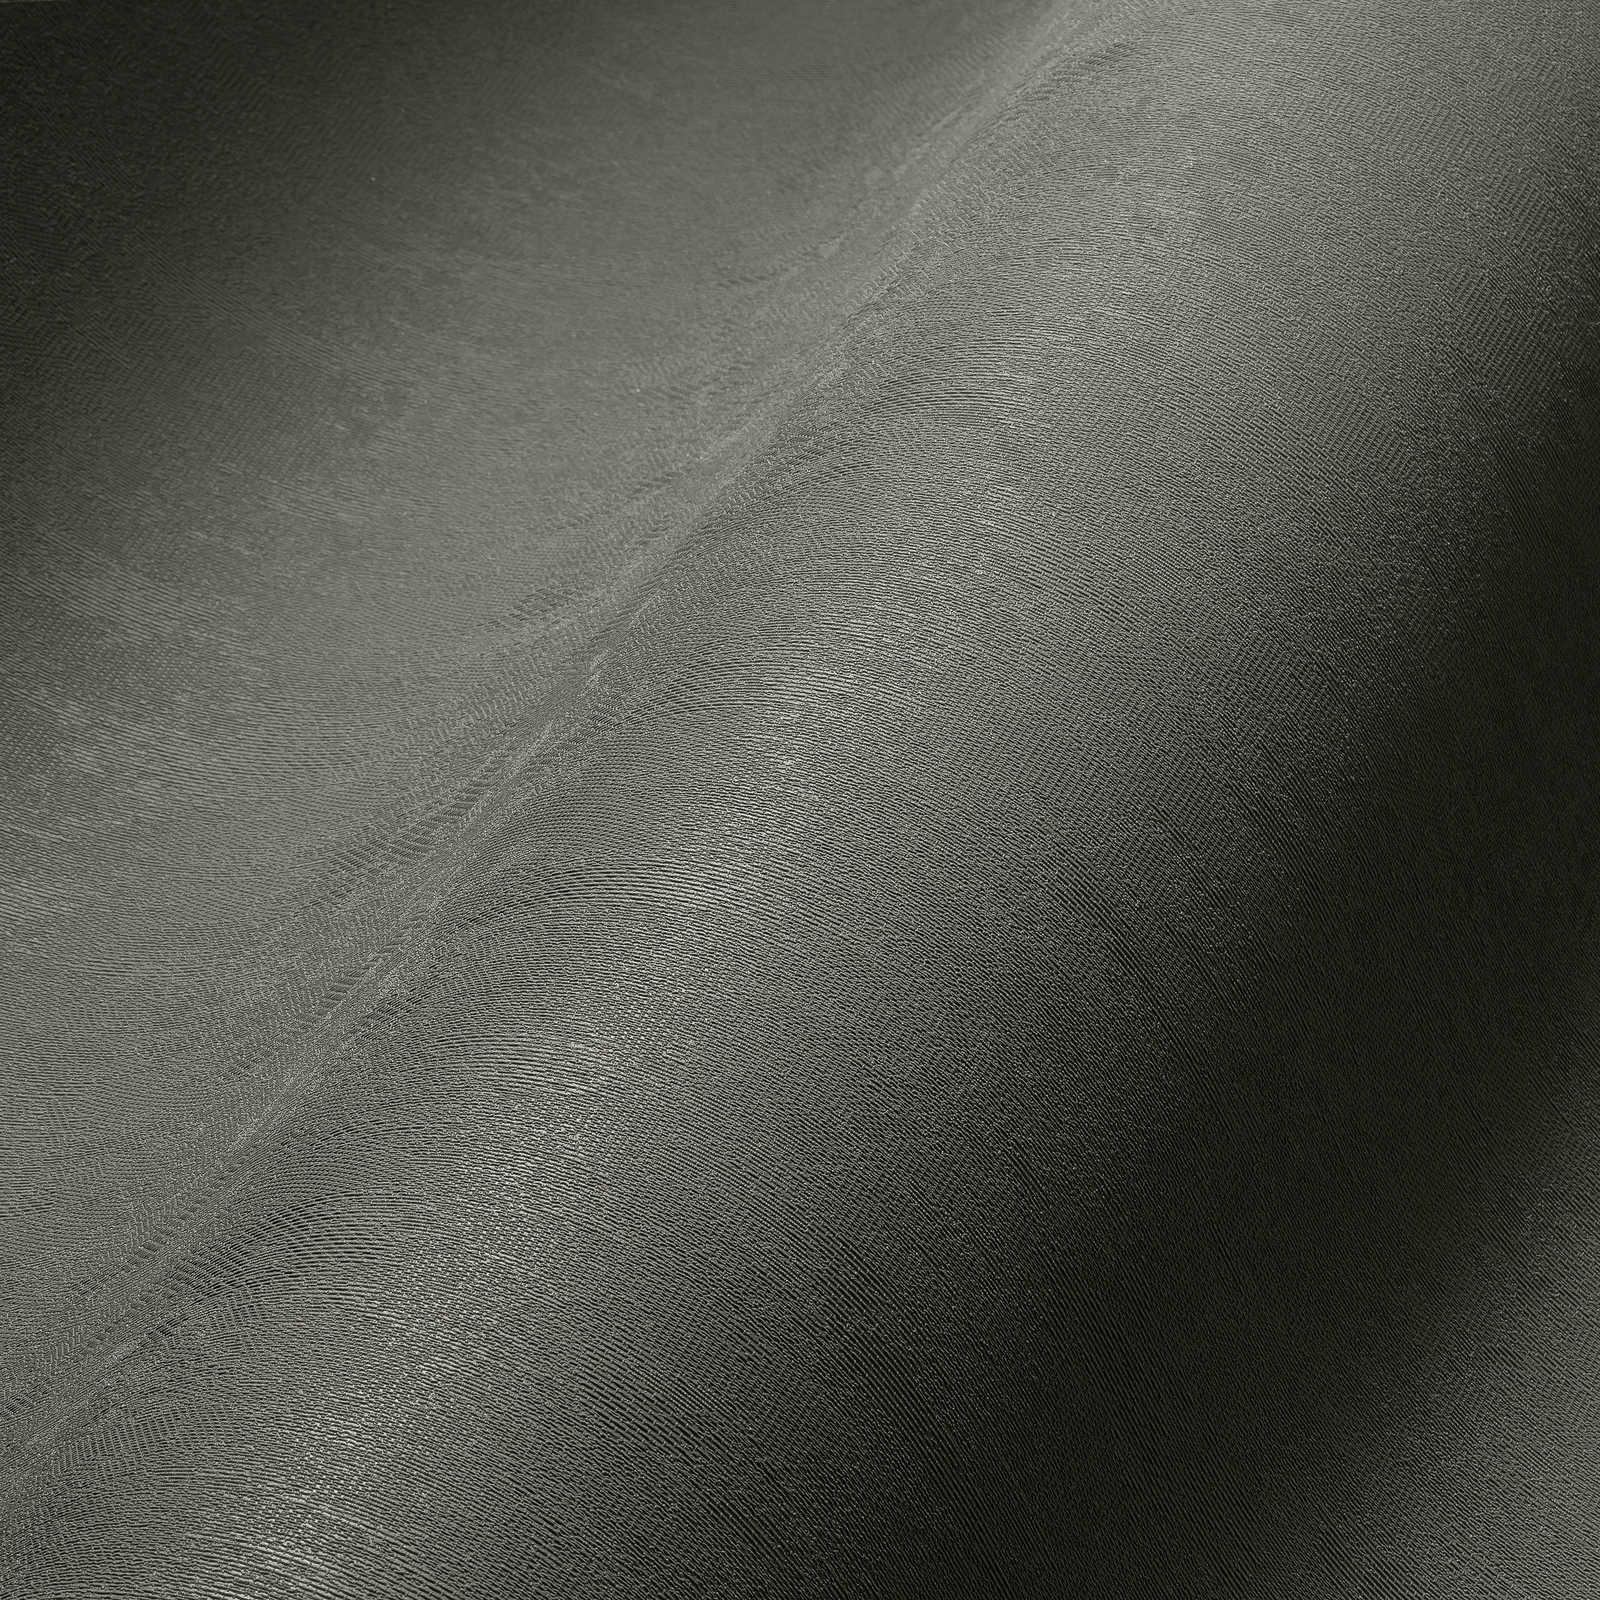             Non-woven wallpaper dark khaki plain, satin finish - grey
        